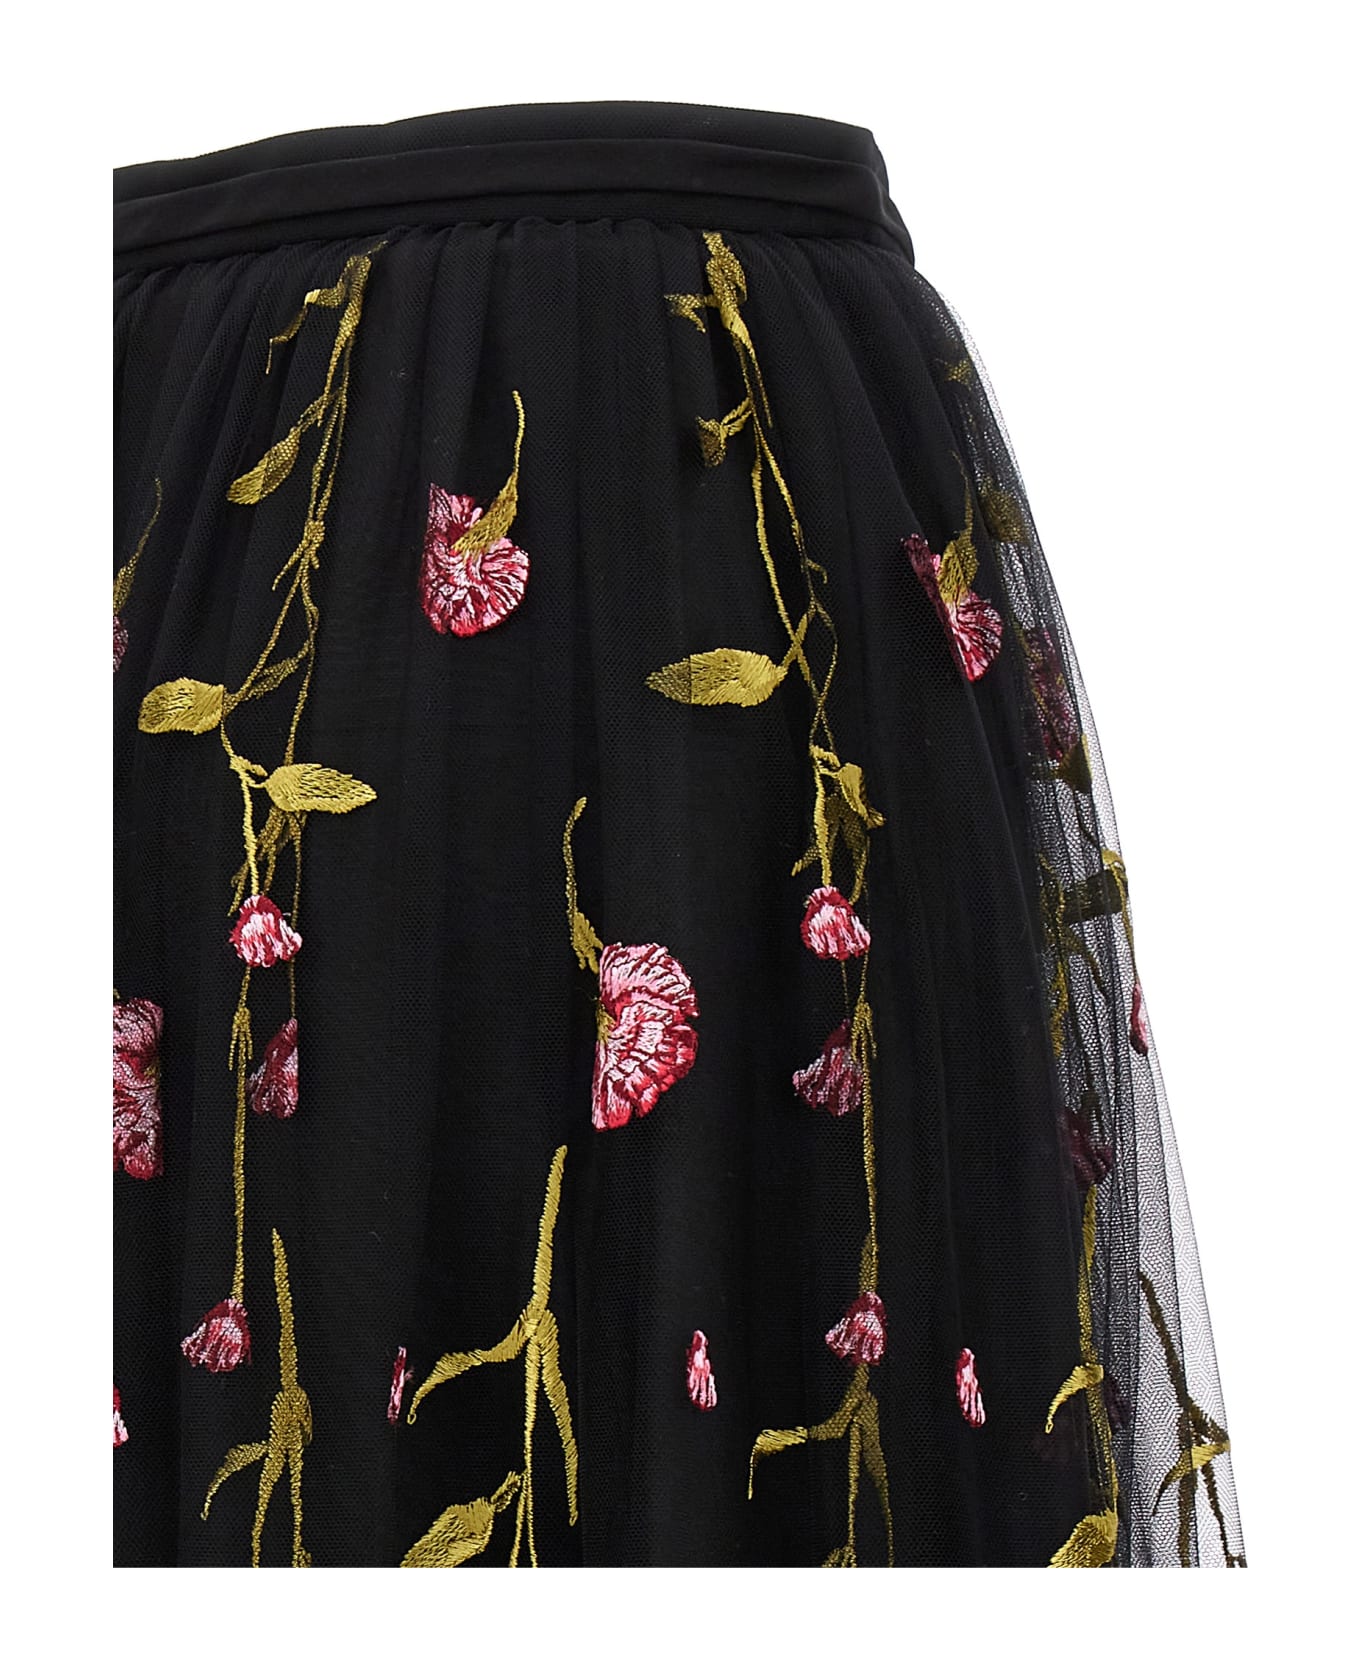 Giambattista Valli Floral Embroidery Skirt - Multicolor スカート